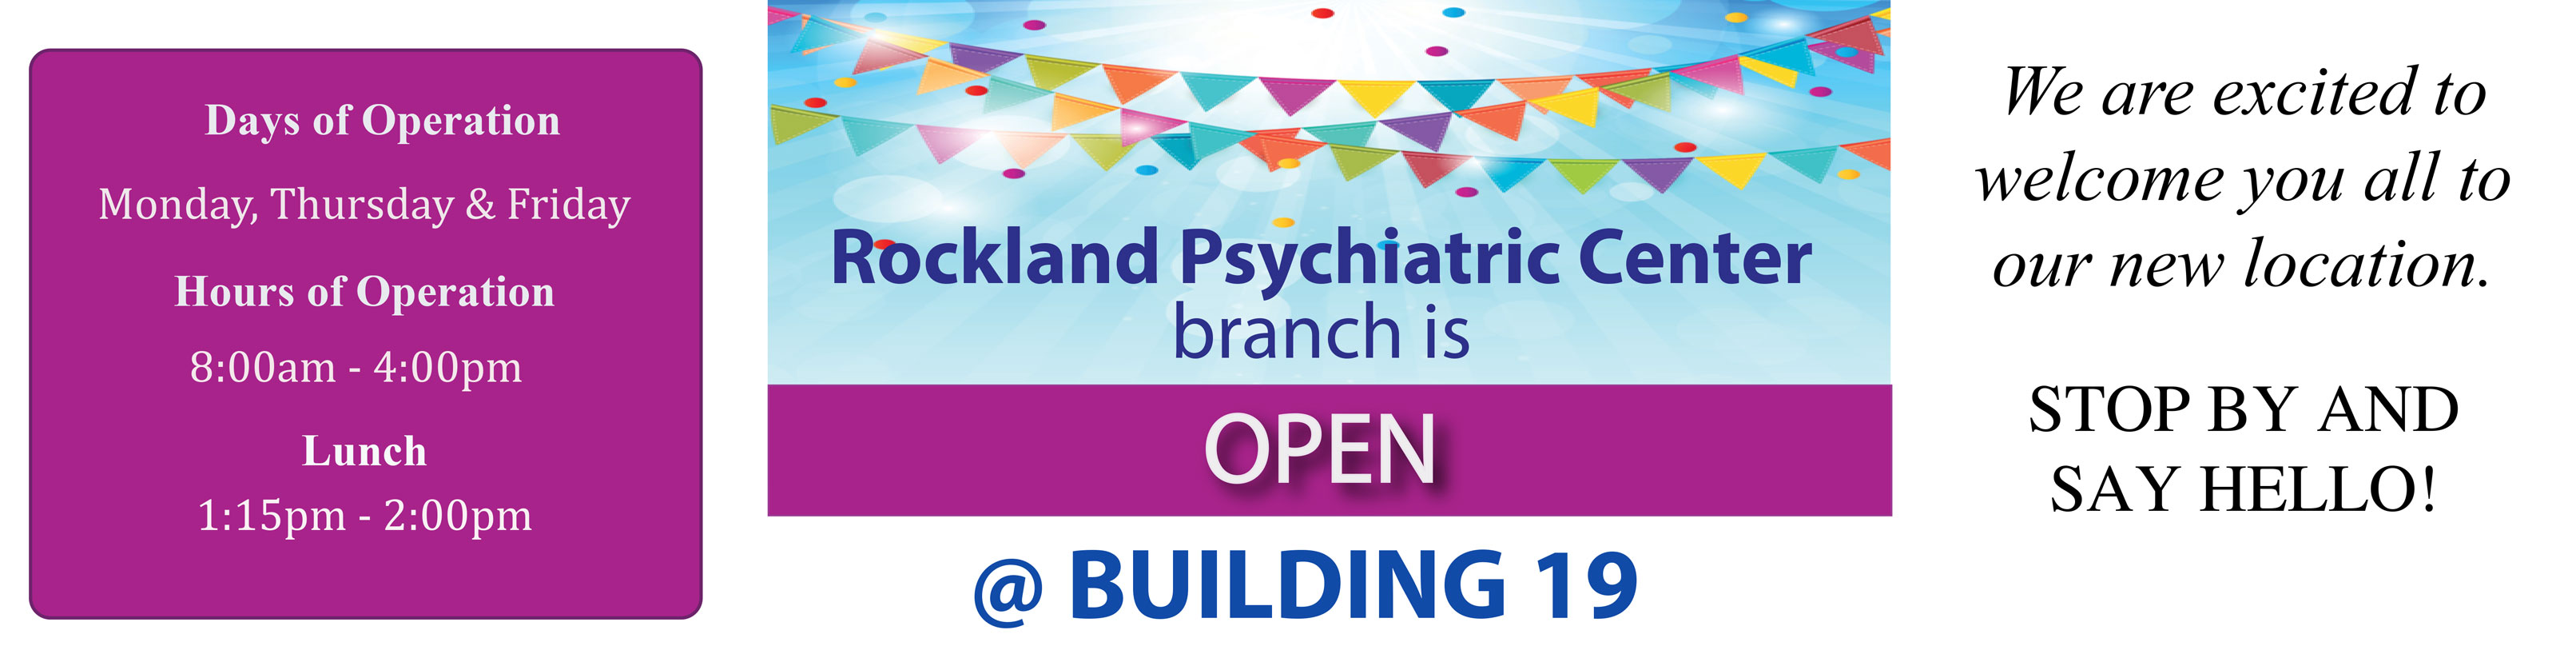 Rockland Psychiatric Center branch now open